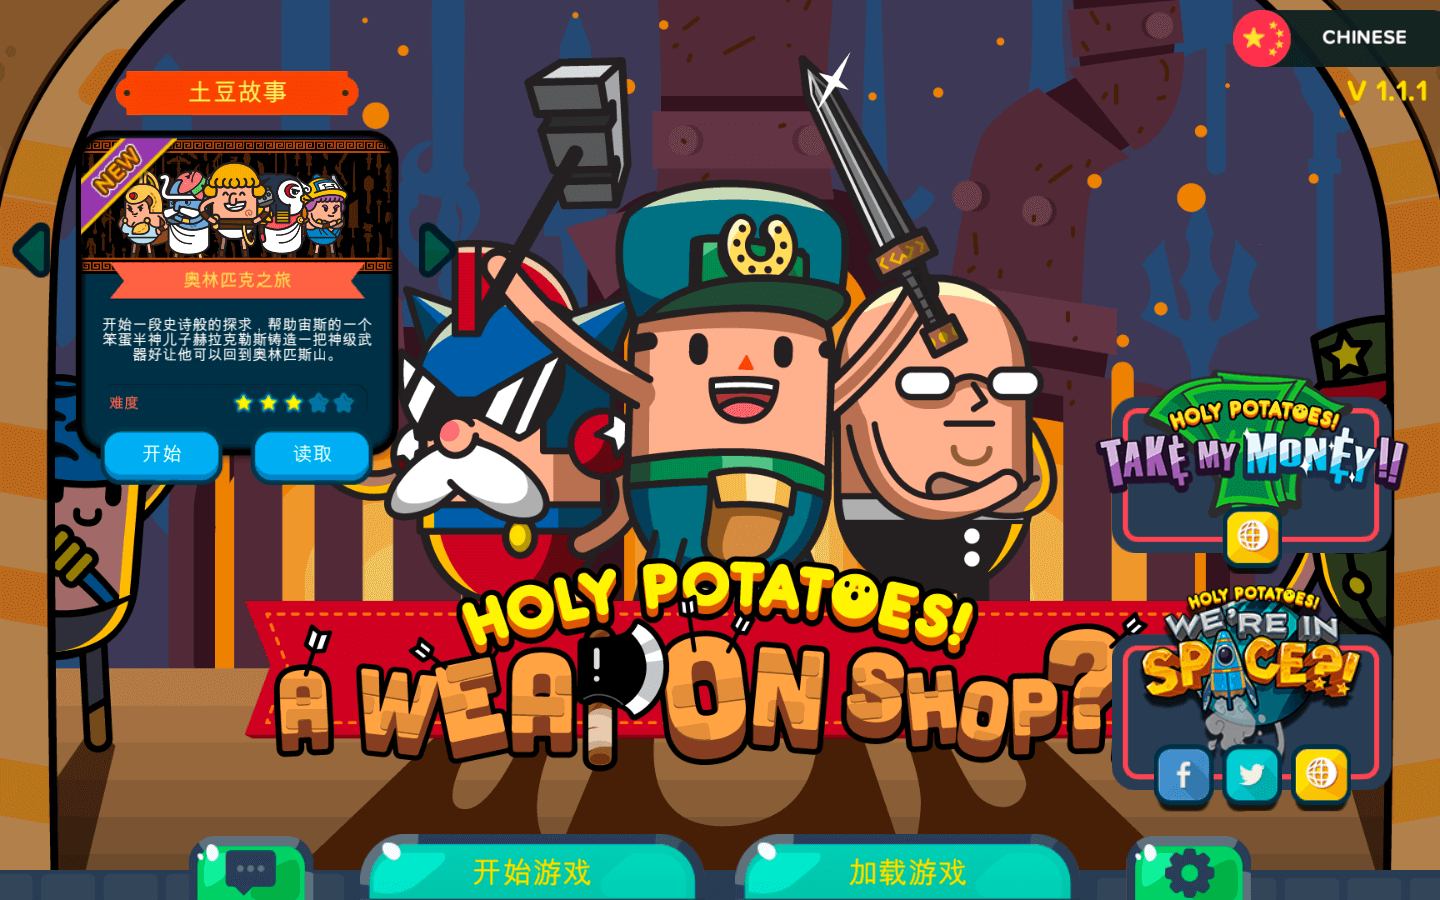 神圣土豆的武器店 for Mac Holy Potatoes! A Weapon Shop?! v1.1.4.1 中文原生版 苹果电脑